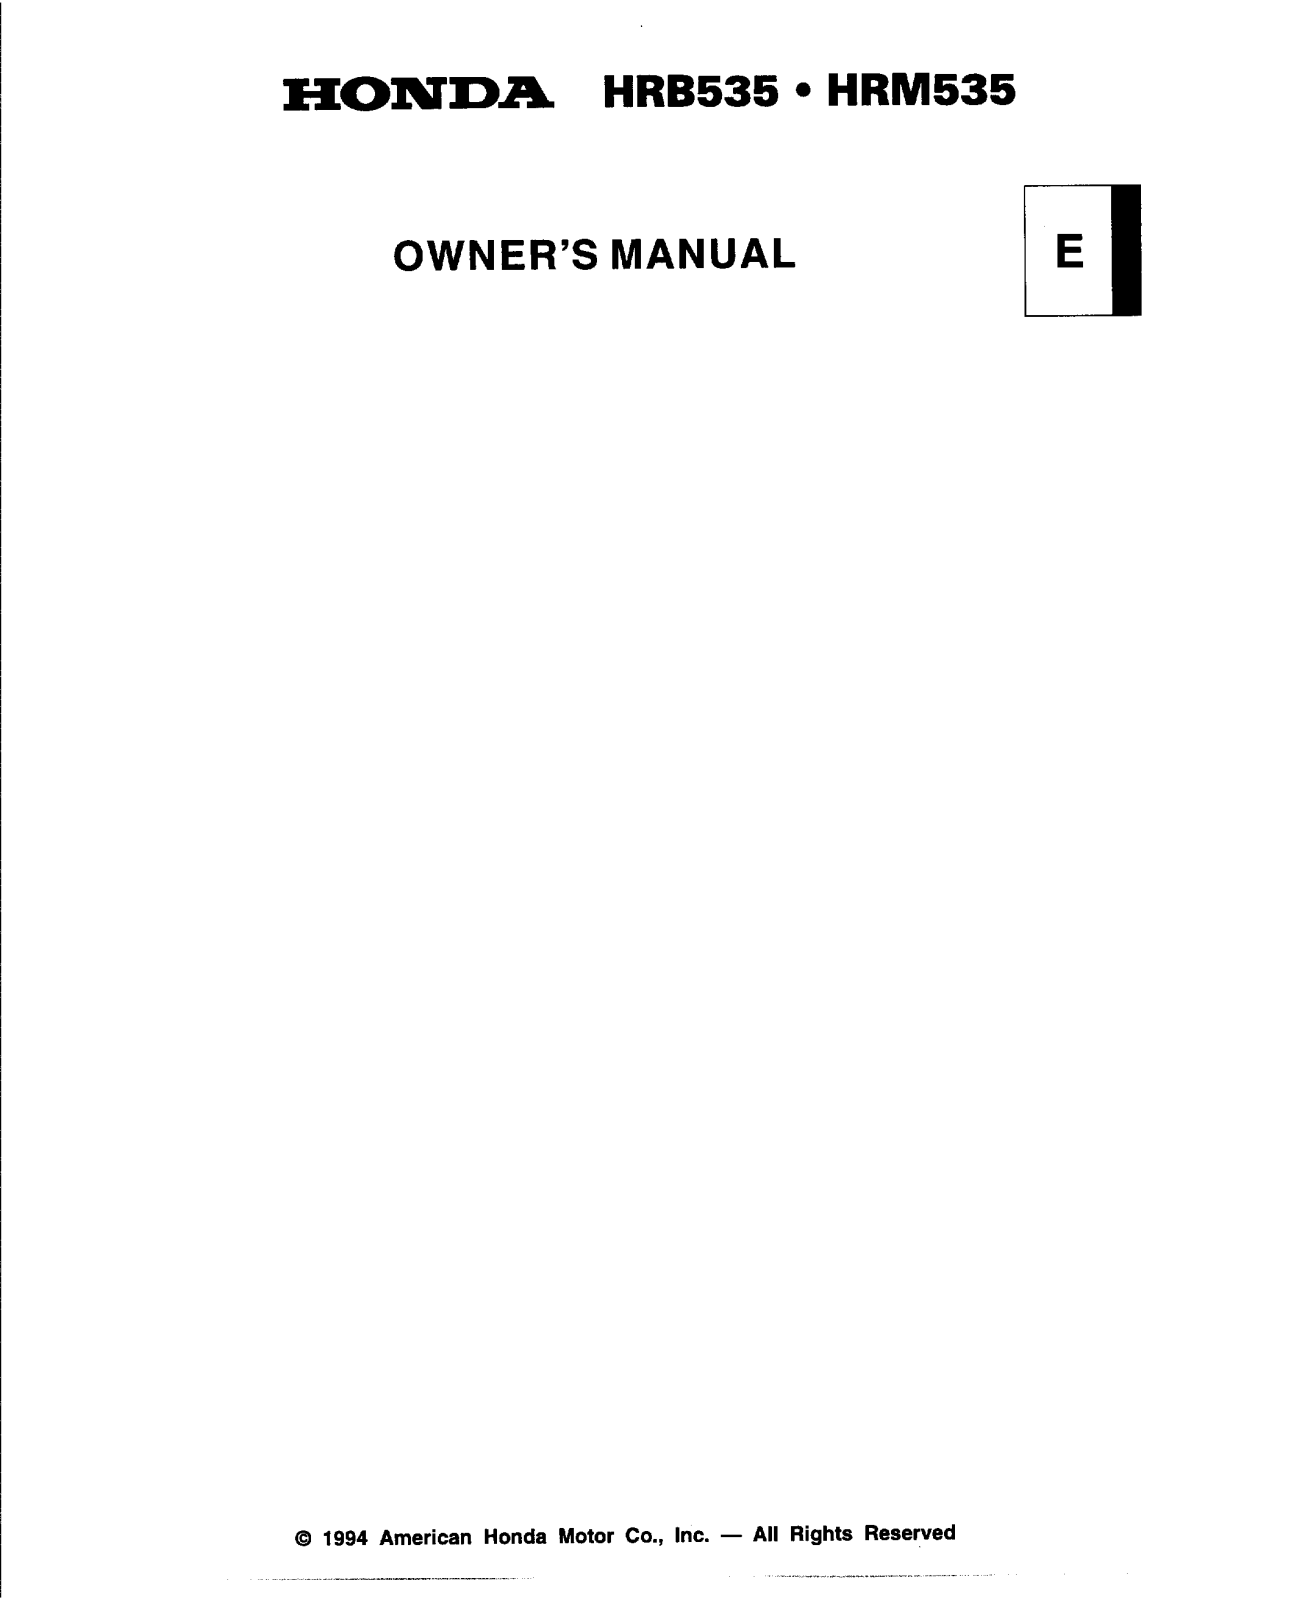 Honda HRB535, HRM535 User Manual